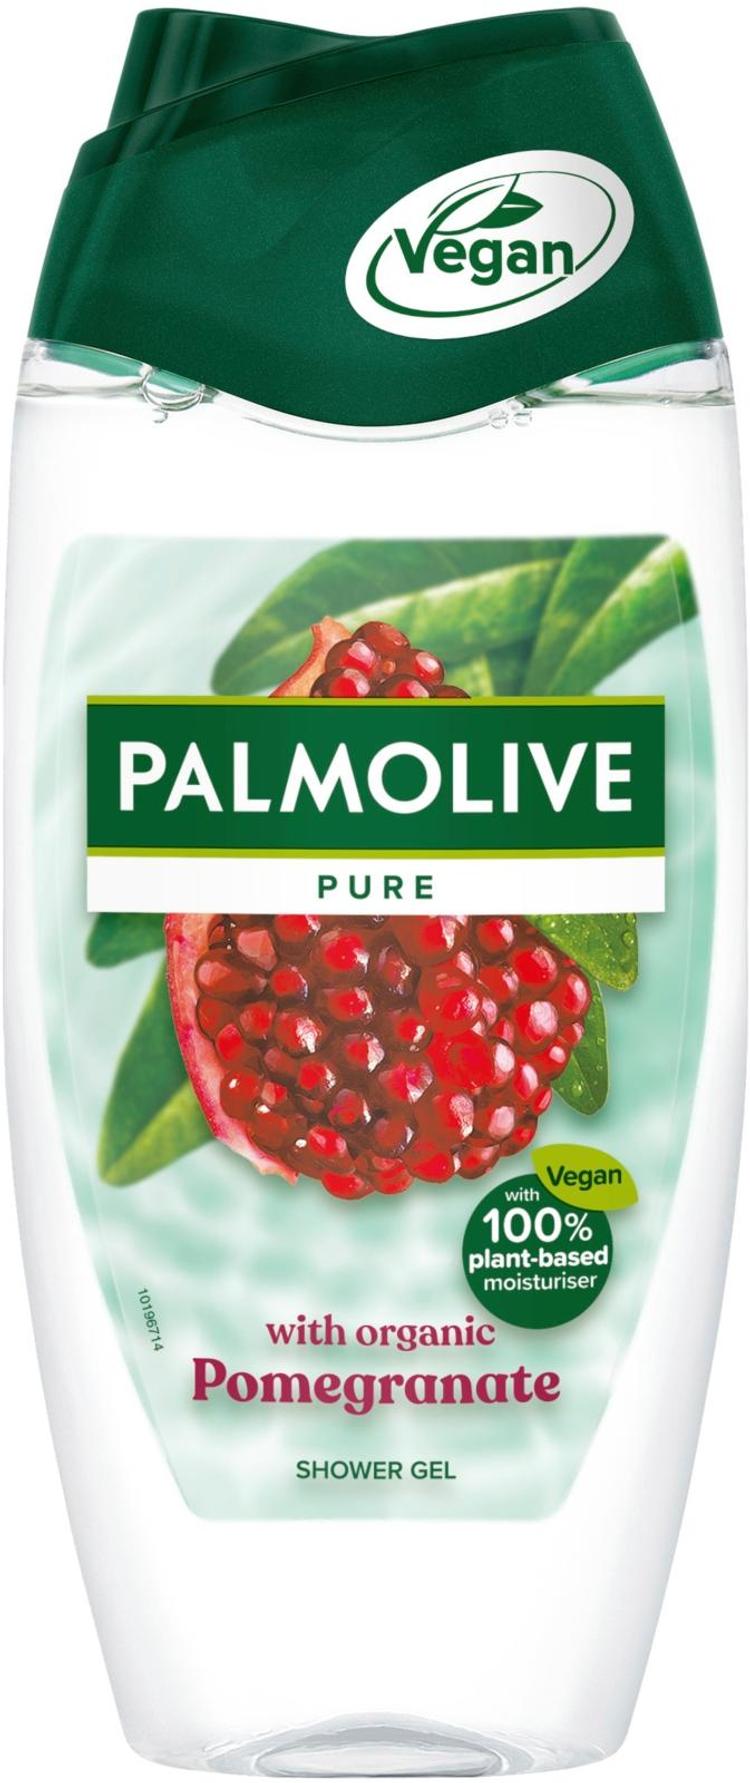 Palmolive Pure Pomegranate suihkusaippua 250ml